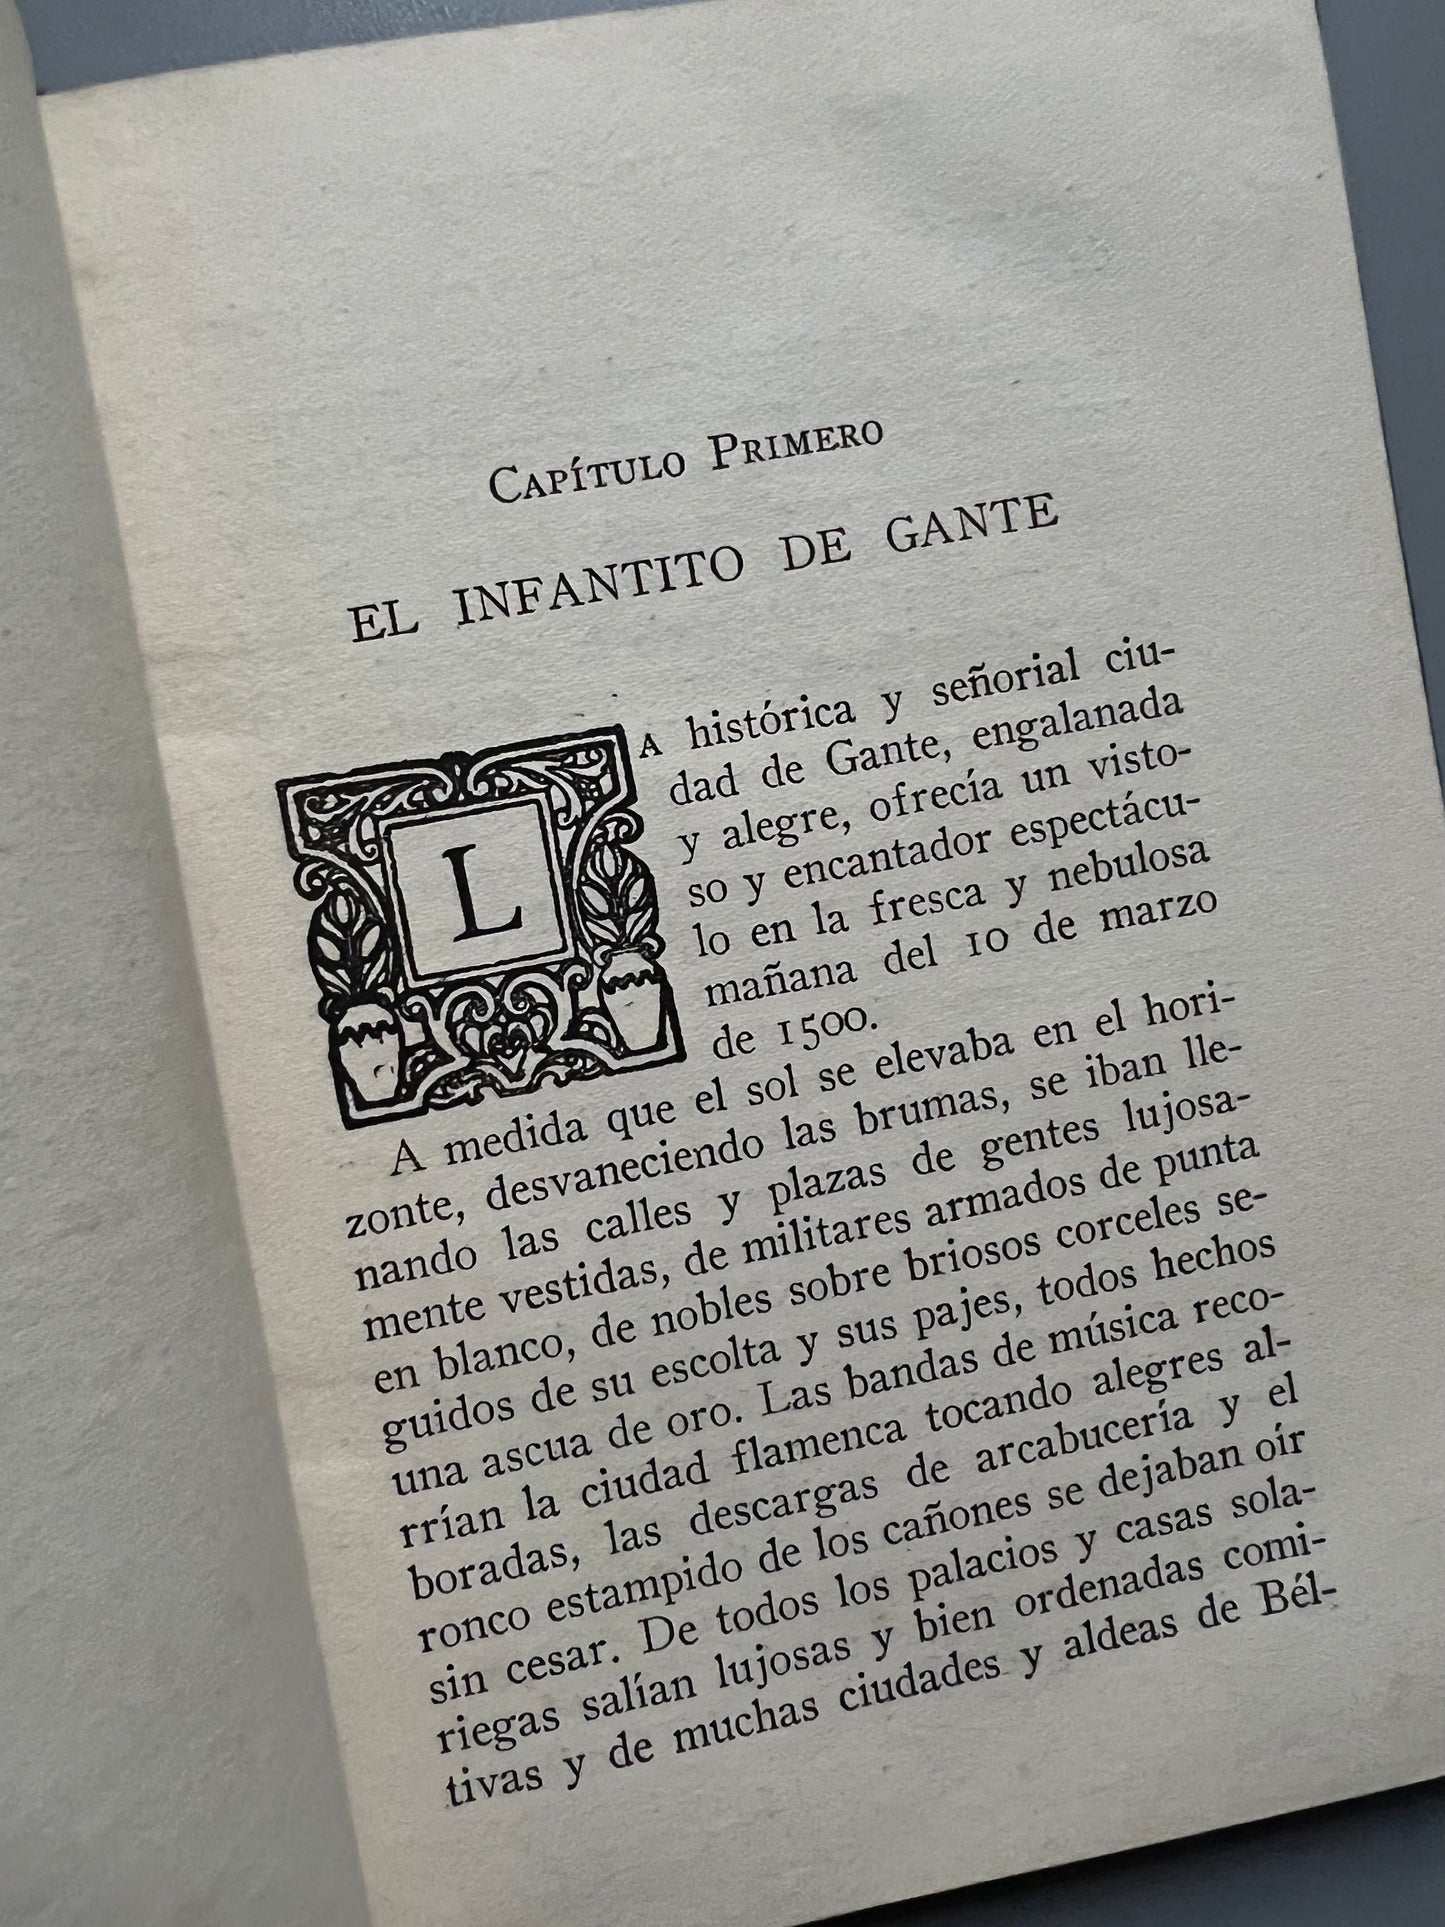 Carlos V, P. Celso García - editorial Araluce, 1940